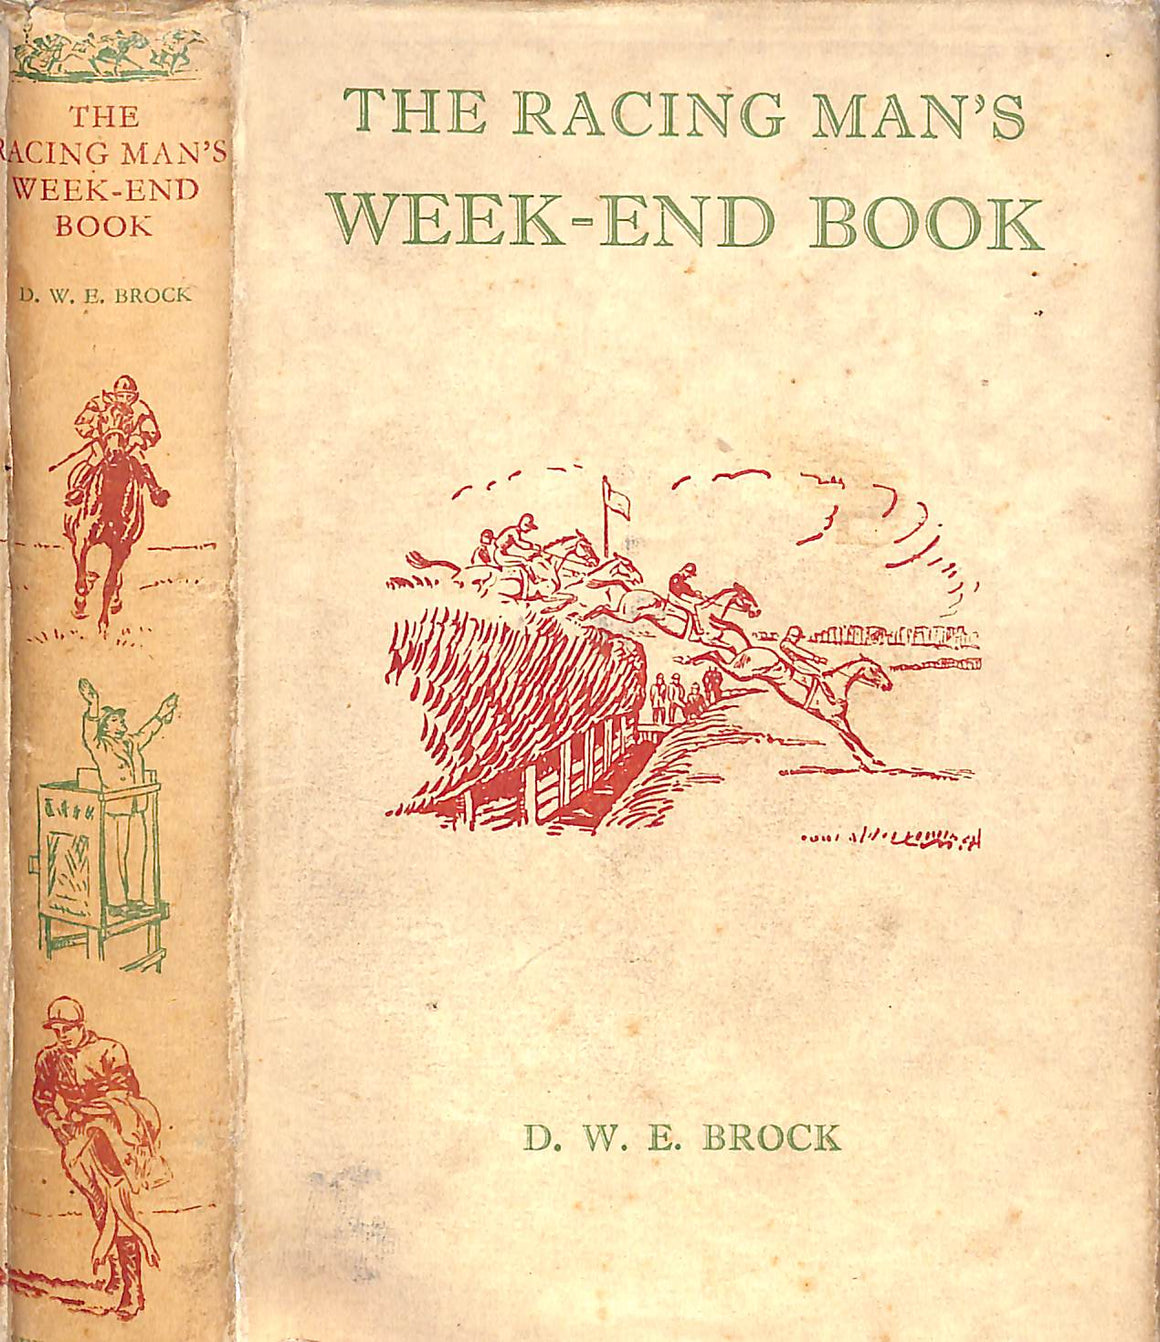 "The Racing Man's Week-End Book" 1949 BROCK, D.W.E.